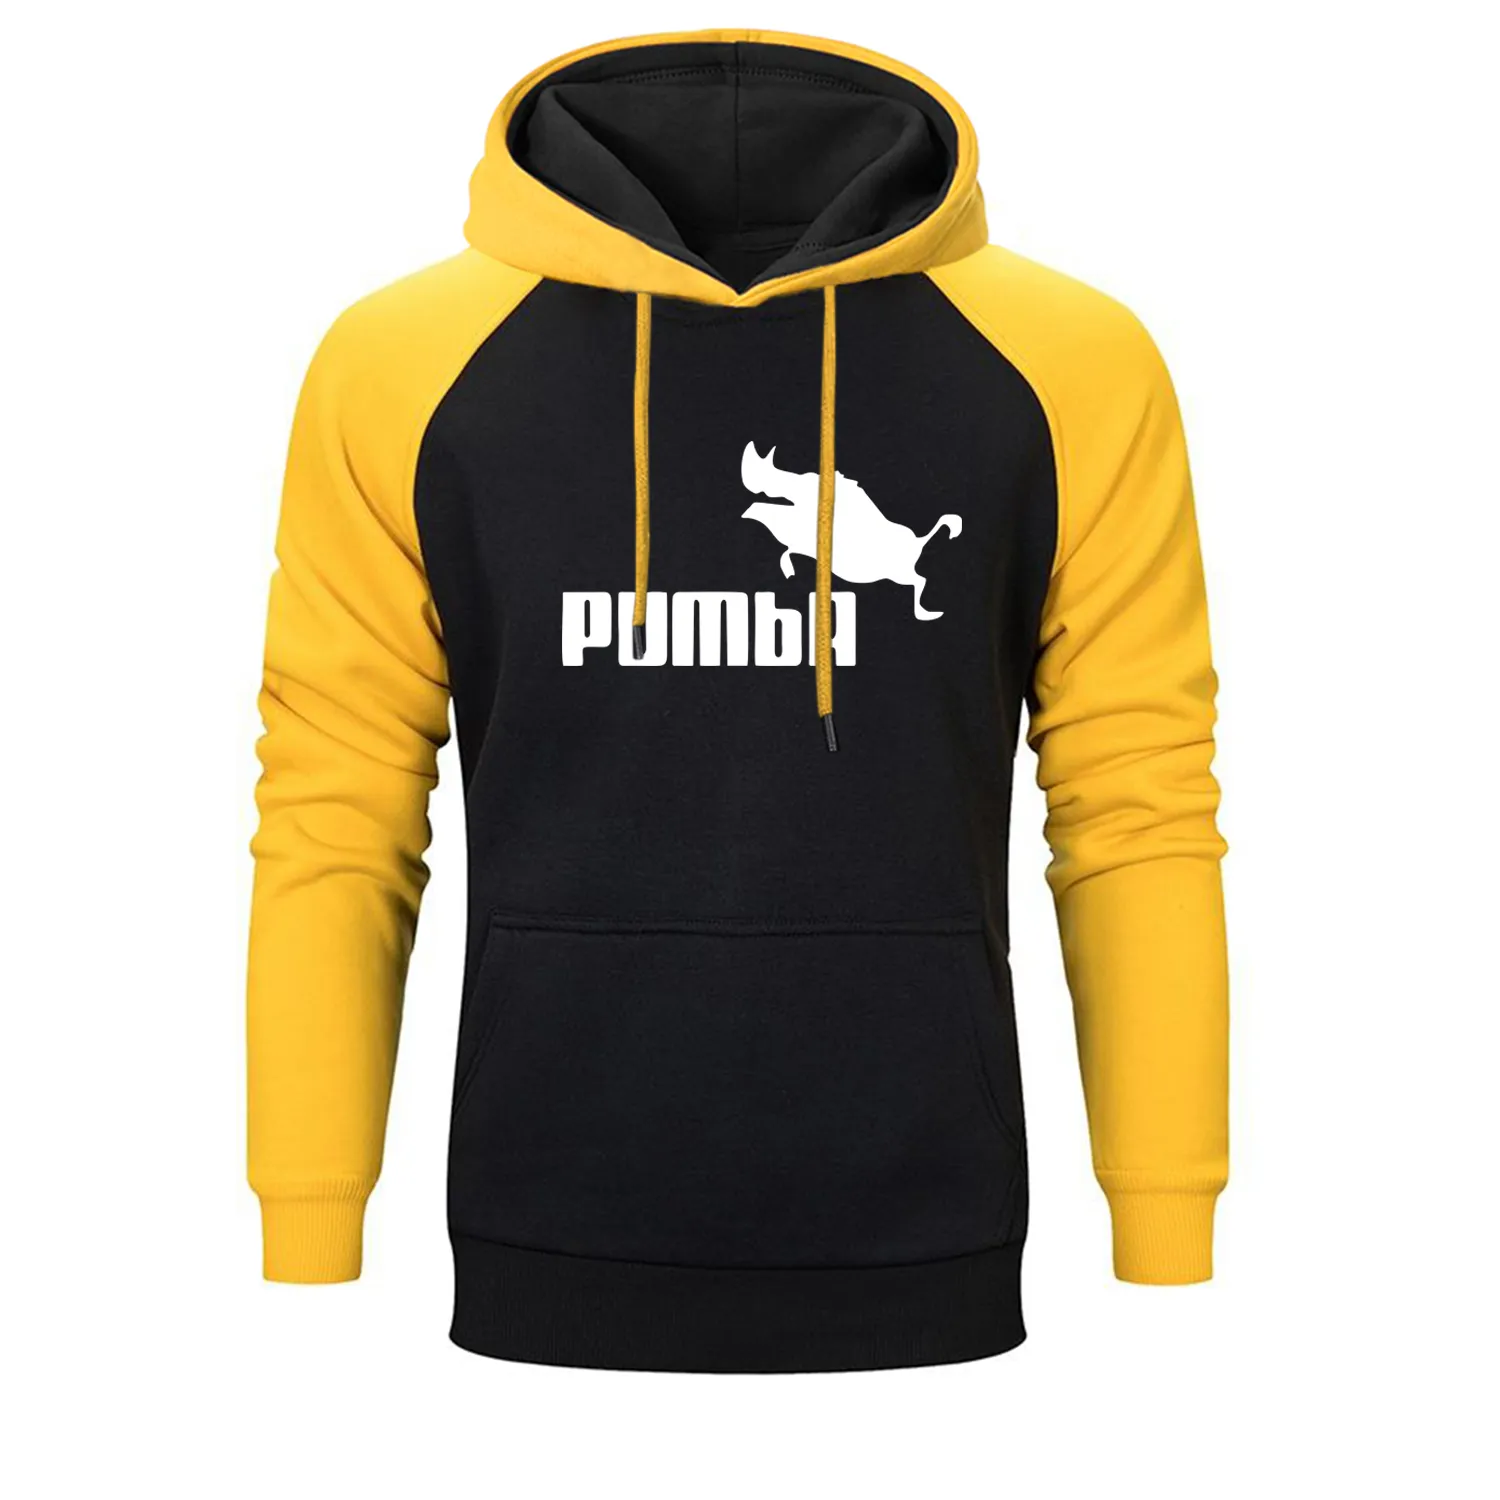 Yeni komik sevimli raglan hoodies homme pumba erkekler erkek hoodies hip hop serin men039s Streetwear Sonbahar Kış Moda Sweatshirt LJ2609607